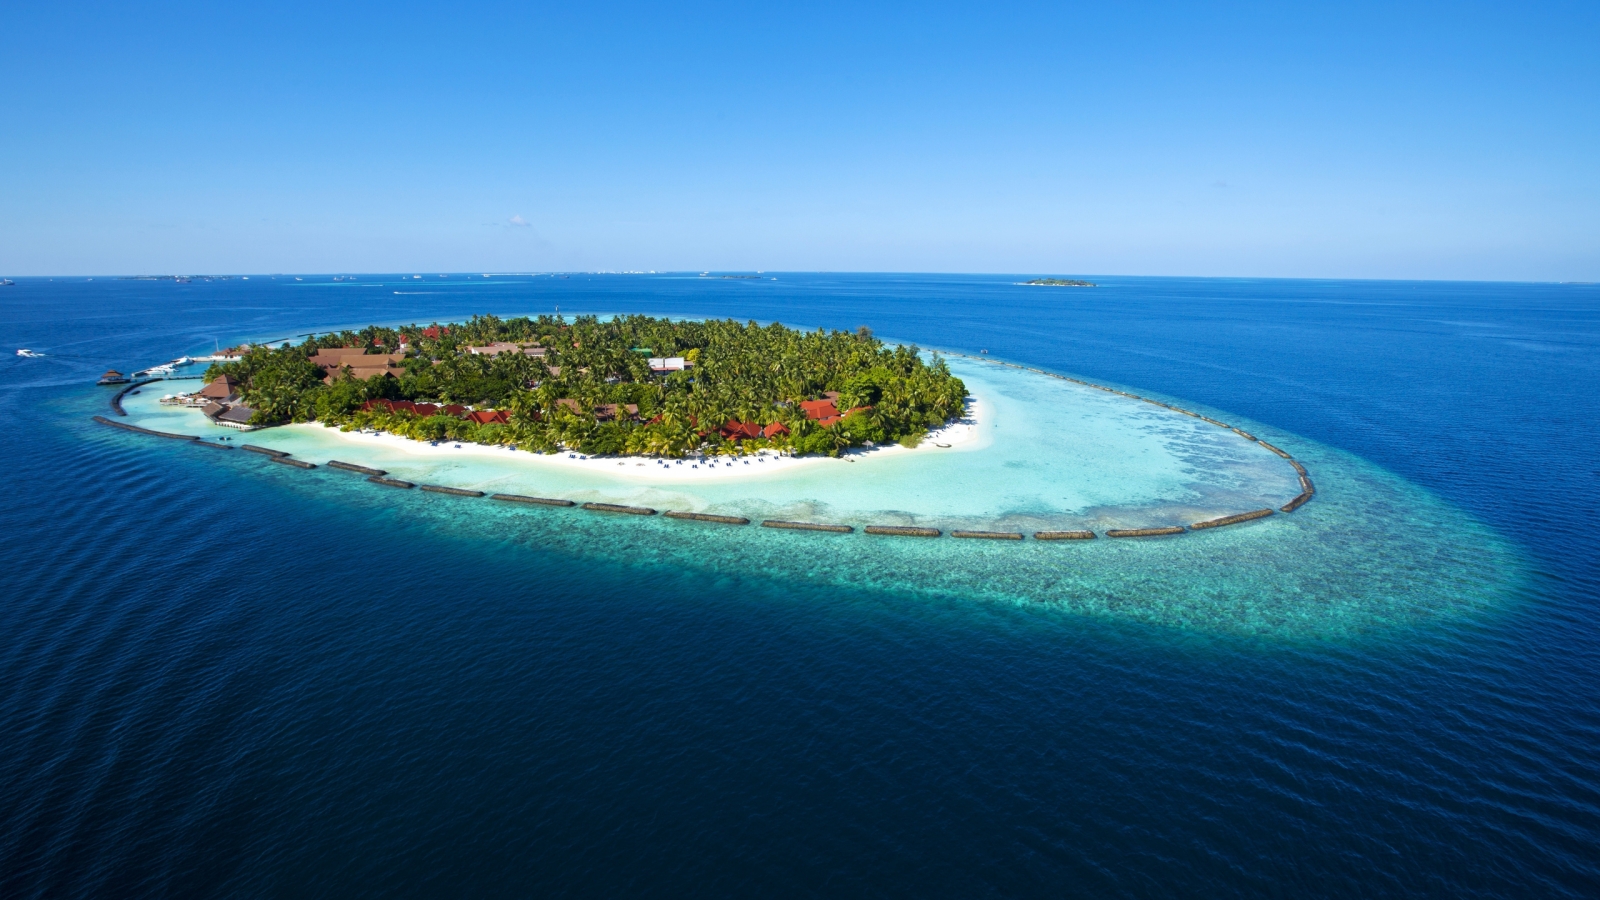 Amazing Maldives Island View for 1600 x 900 HDTV resolution